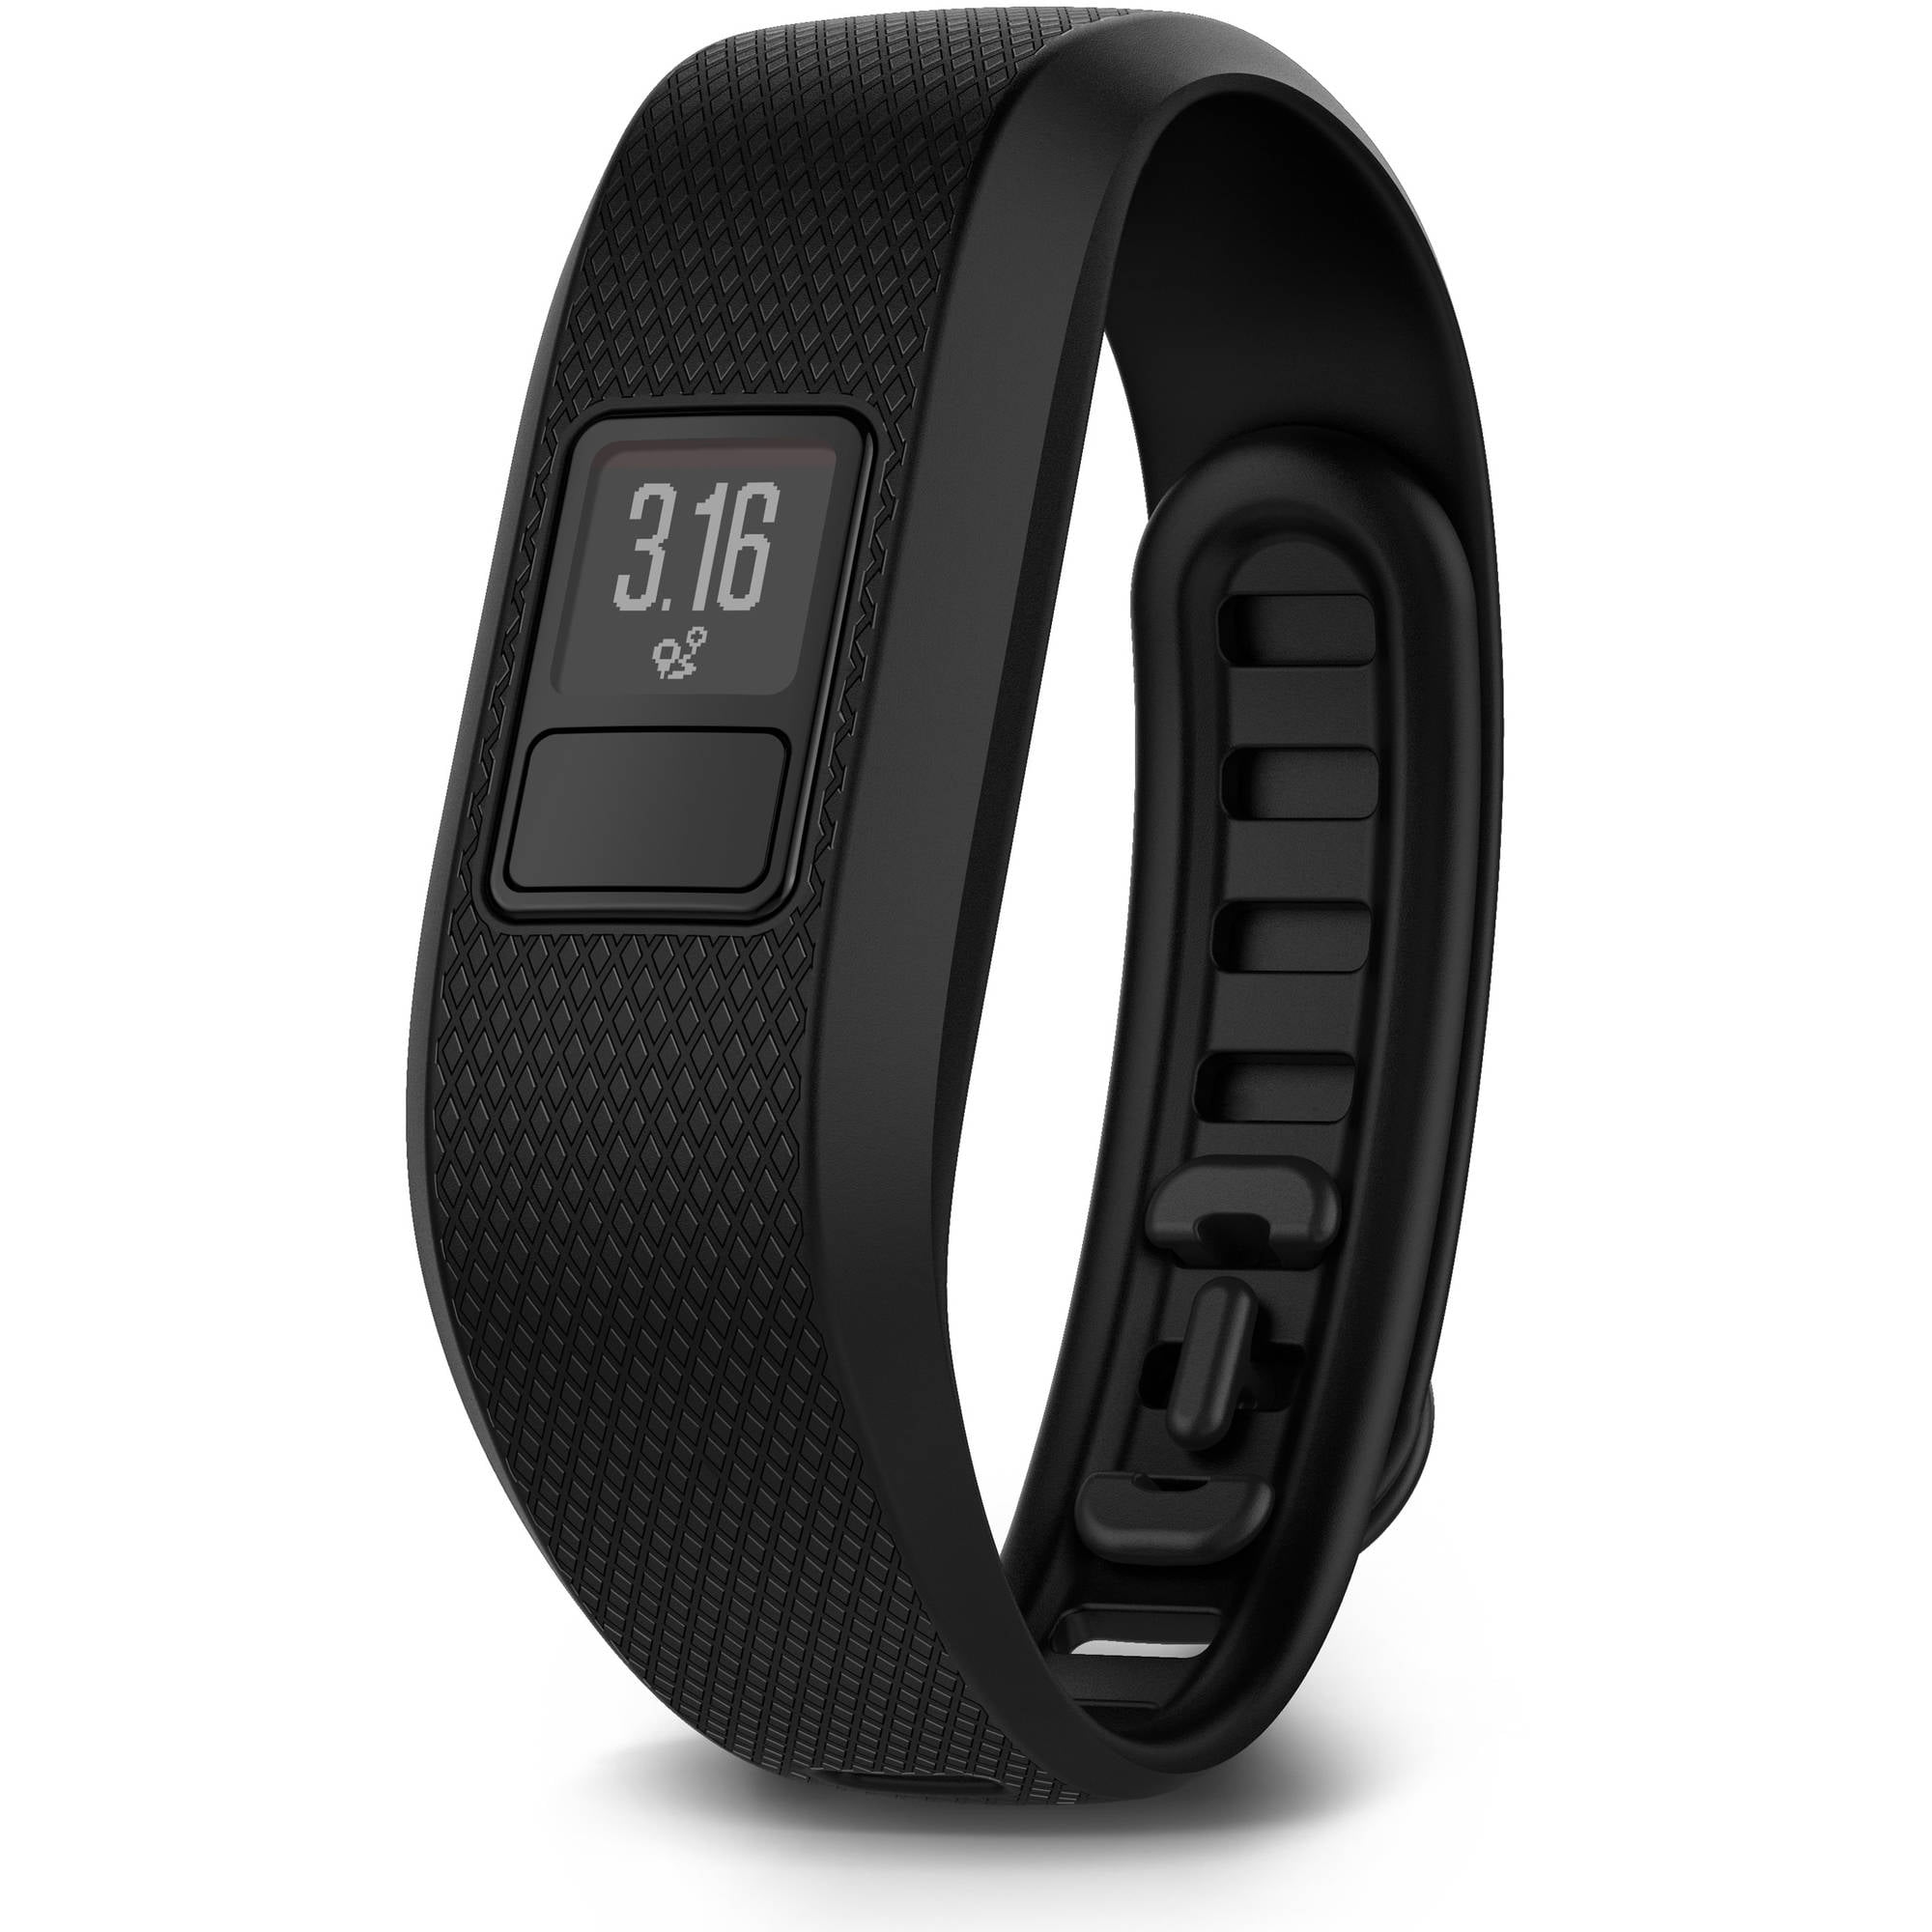 Large Fitbit Blaze Smart Fitness Watch Black for sale online 